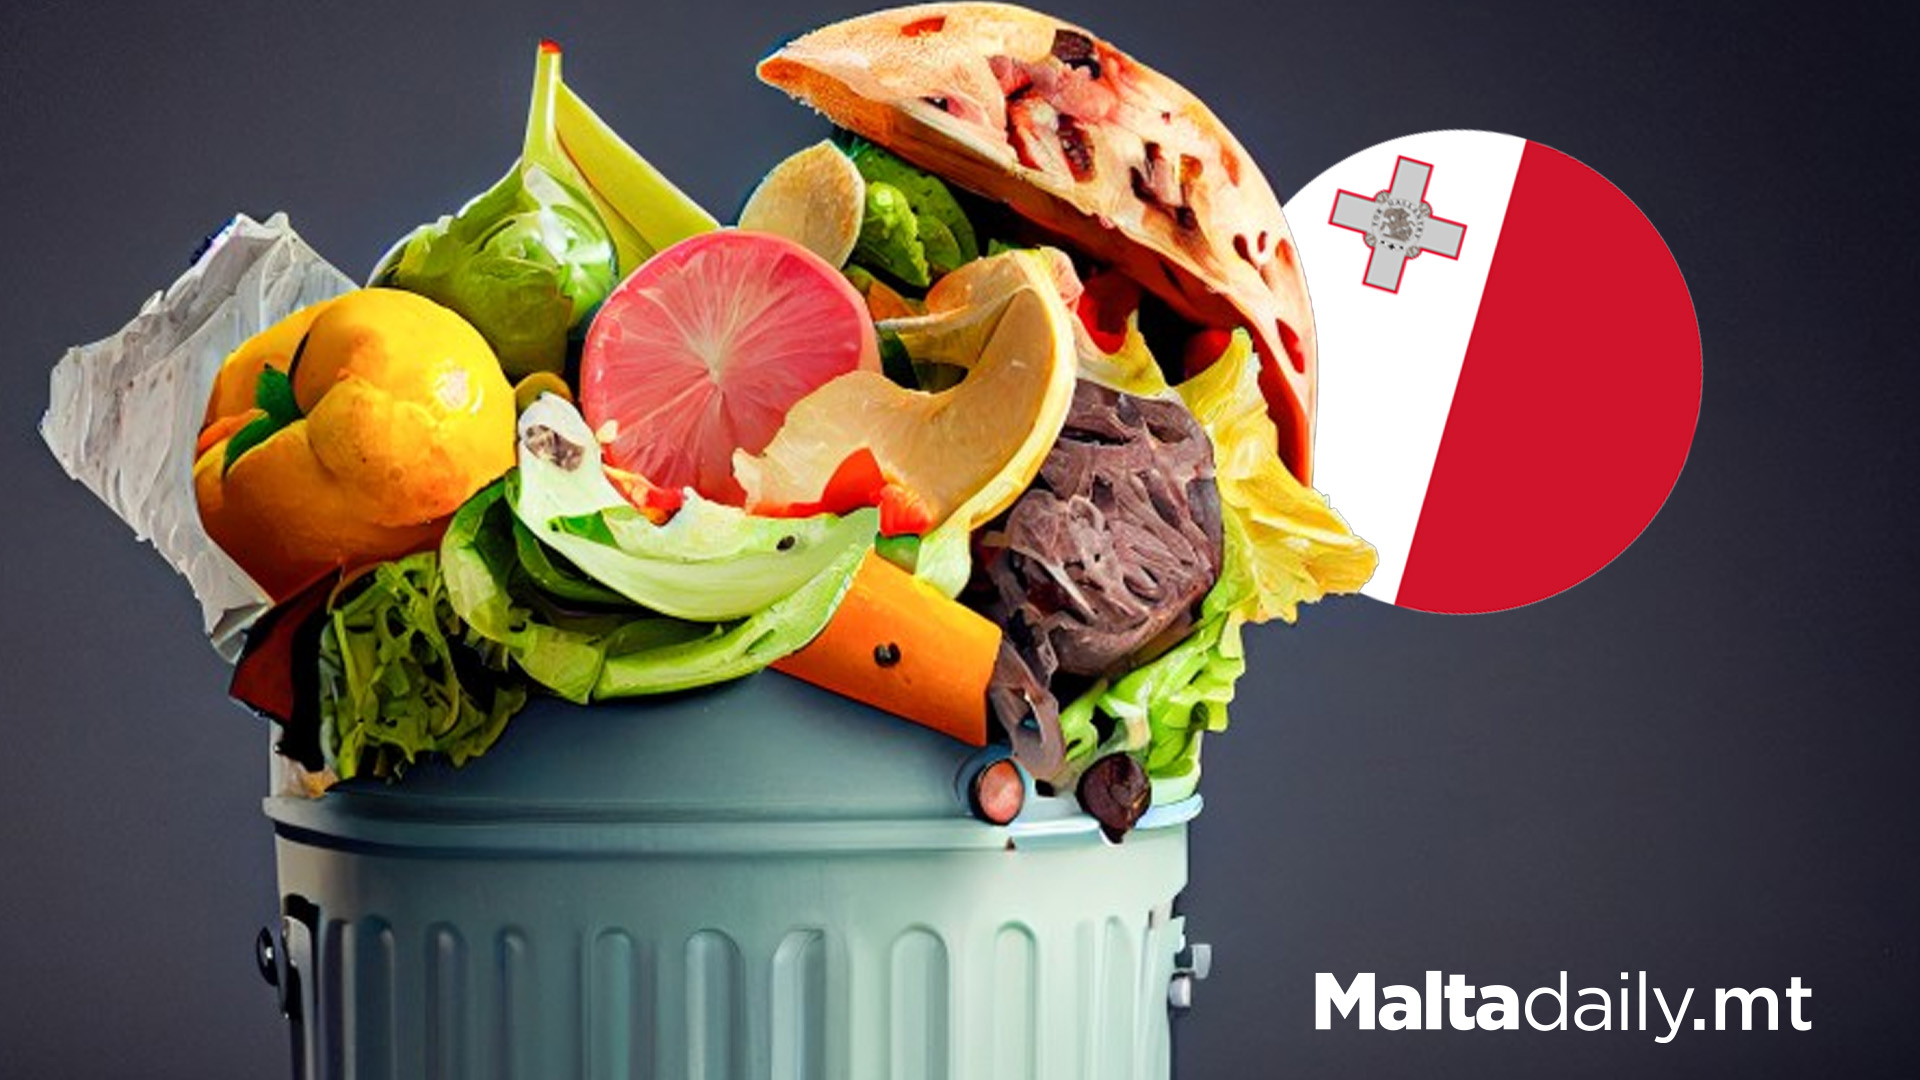 Maltese Throw Away Average 154KG Of Food Per Person